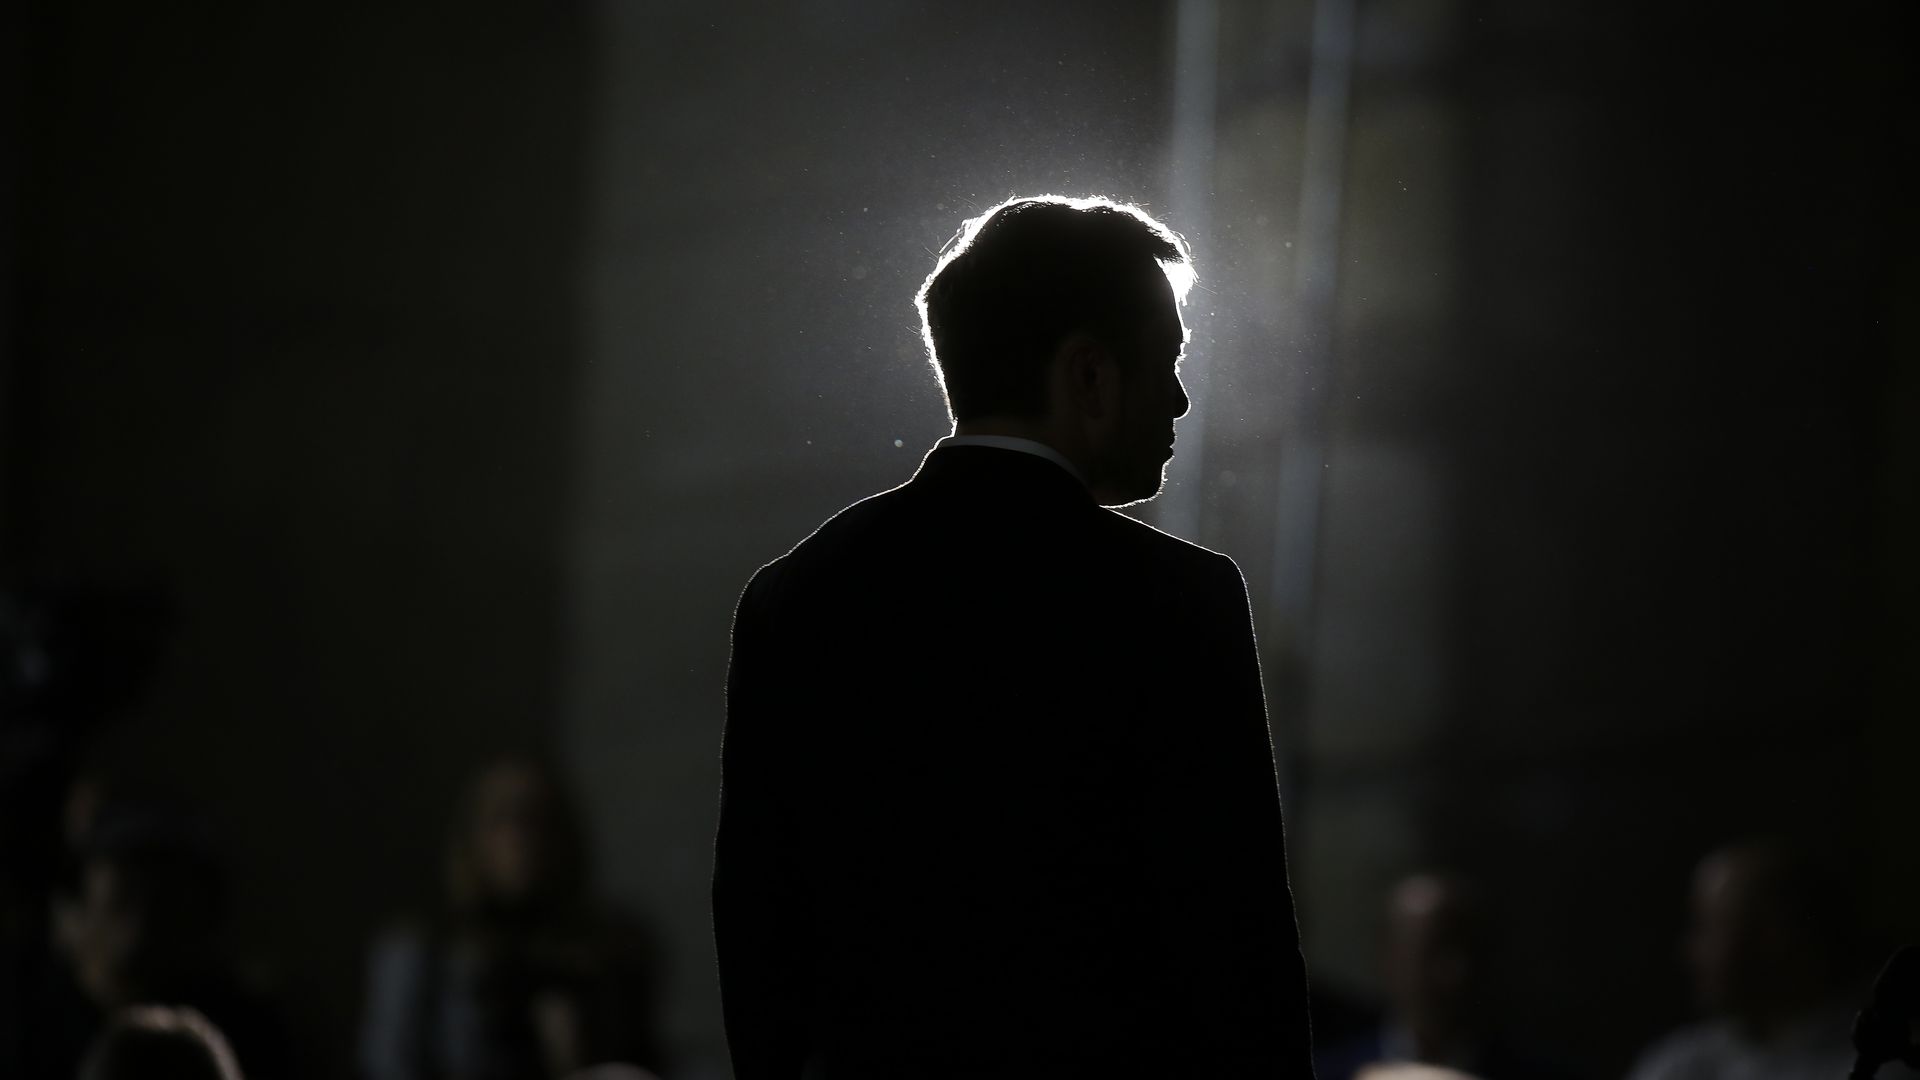 Here is Tesla CEO Elon Musk draped in shadows